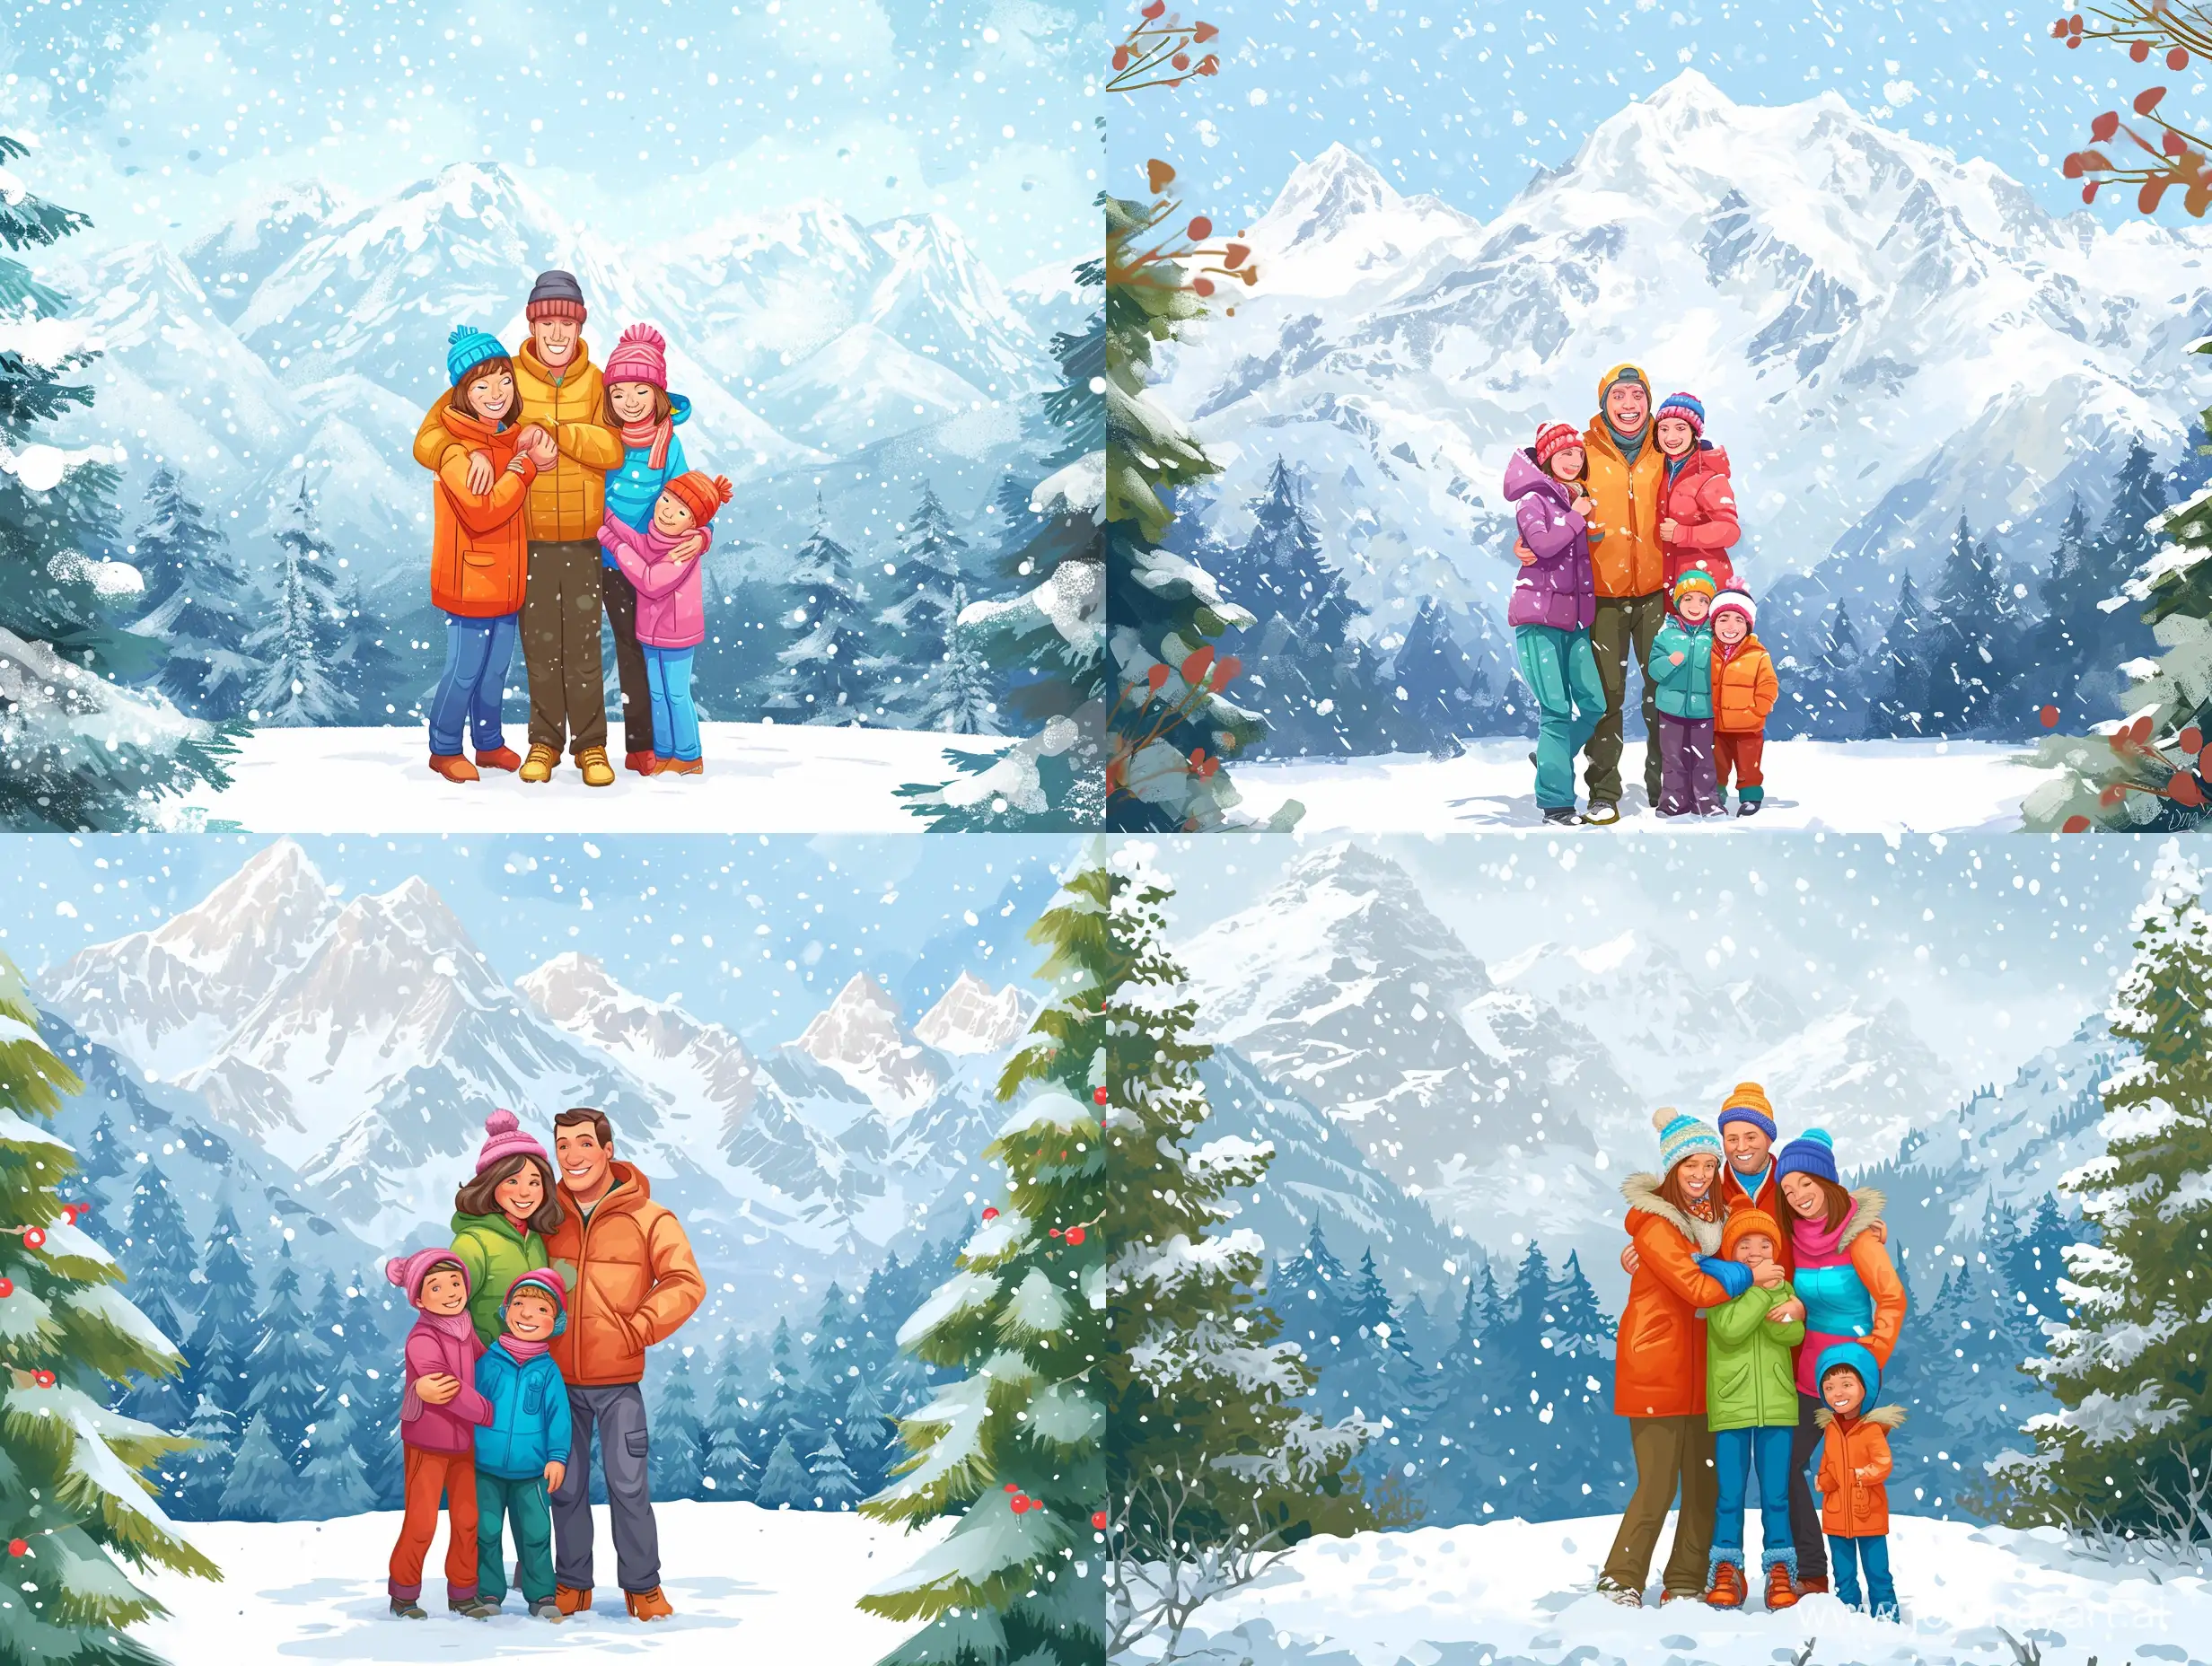 Happy-Family-Embraced-in-Snowy-Disney-Cartoon-Scene